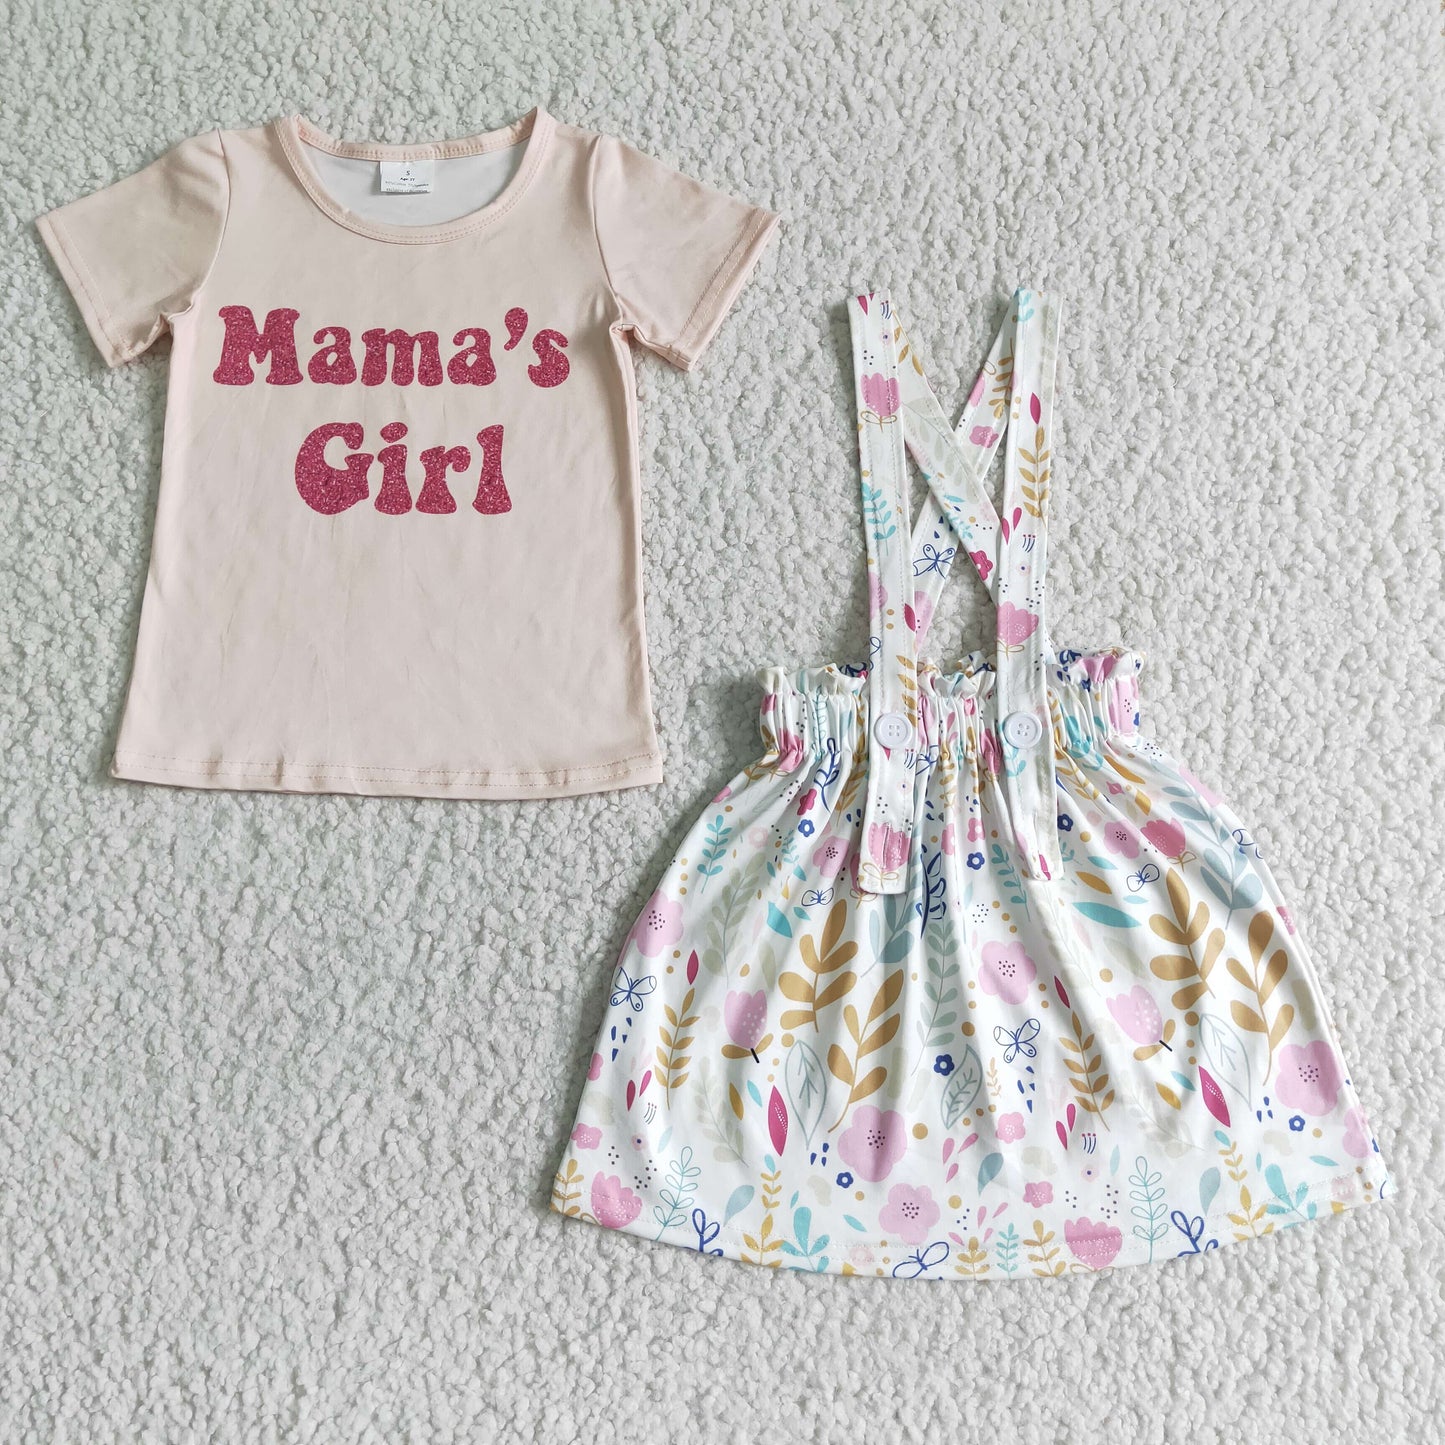 mama’s girl braces skirt set girls clothes